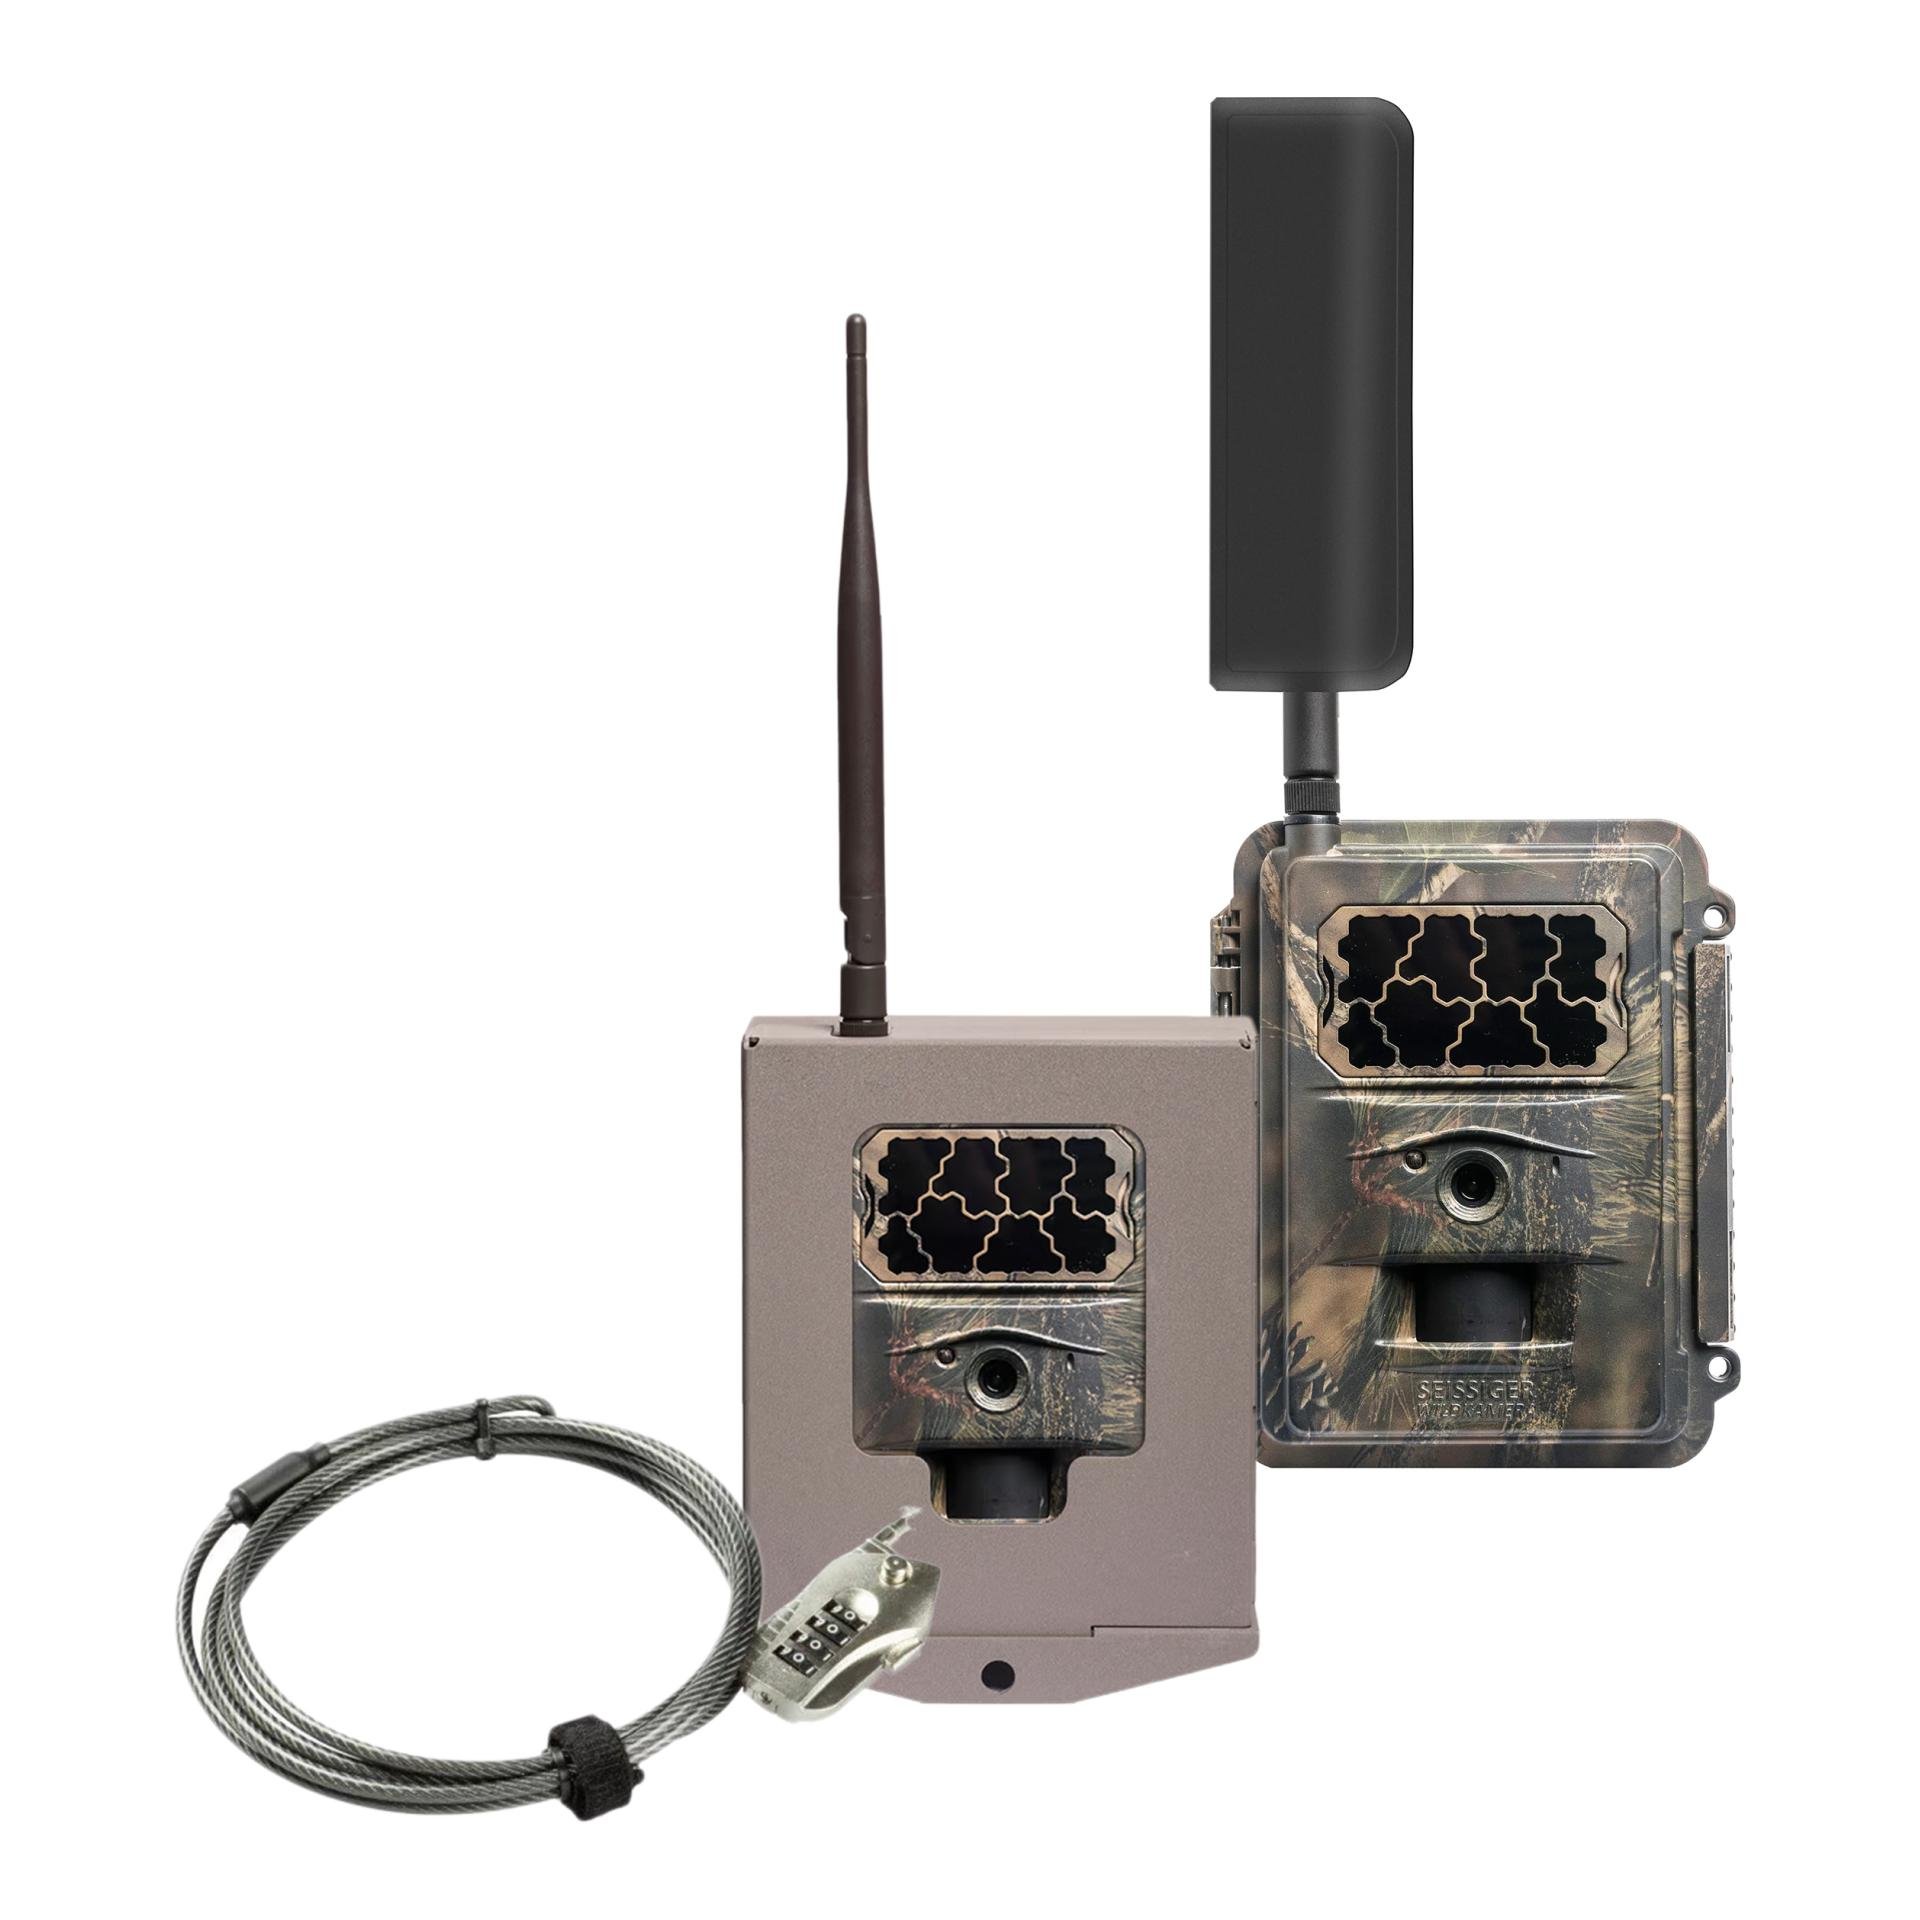 Image of Seissiger Wildkamera Special-Cam LTE Komplett Set 19,9 CHF günstiger als einzeln. bei Hauptner Jagd